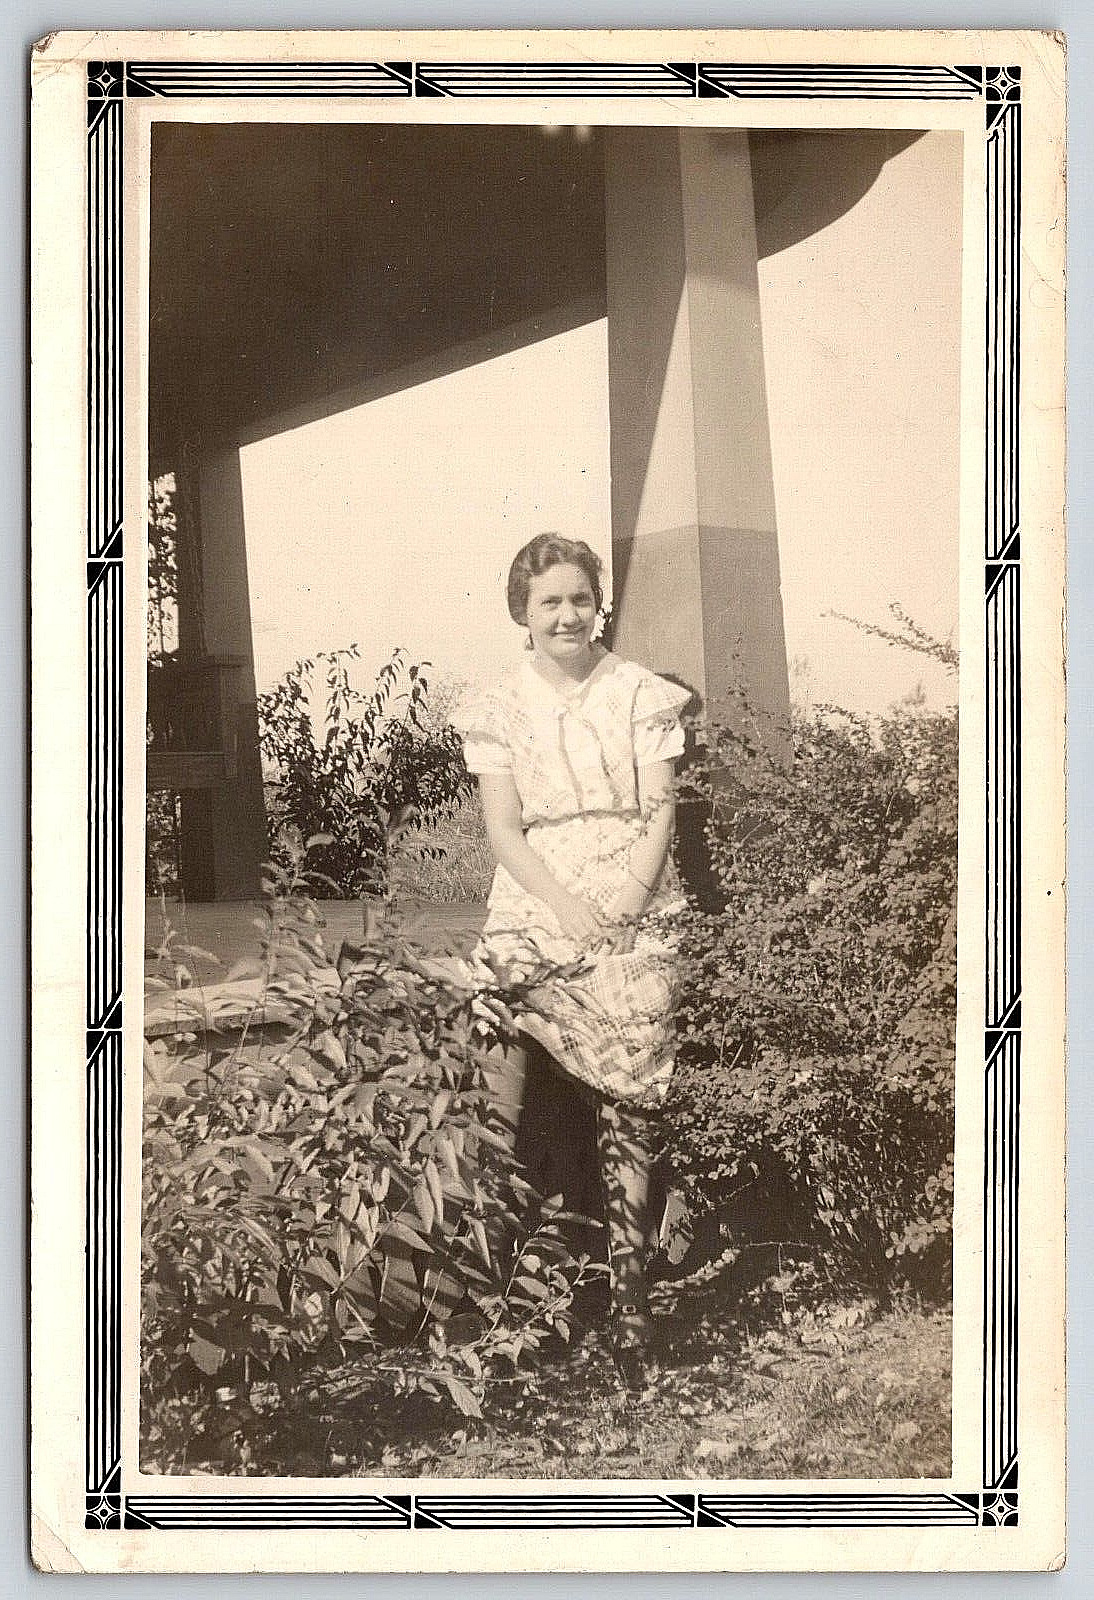 Photograph Vintage Snapshot Woman Girl Dress Fashion House Porch Outdoors B&W